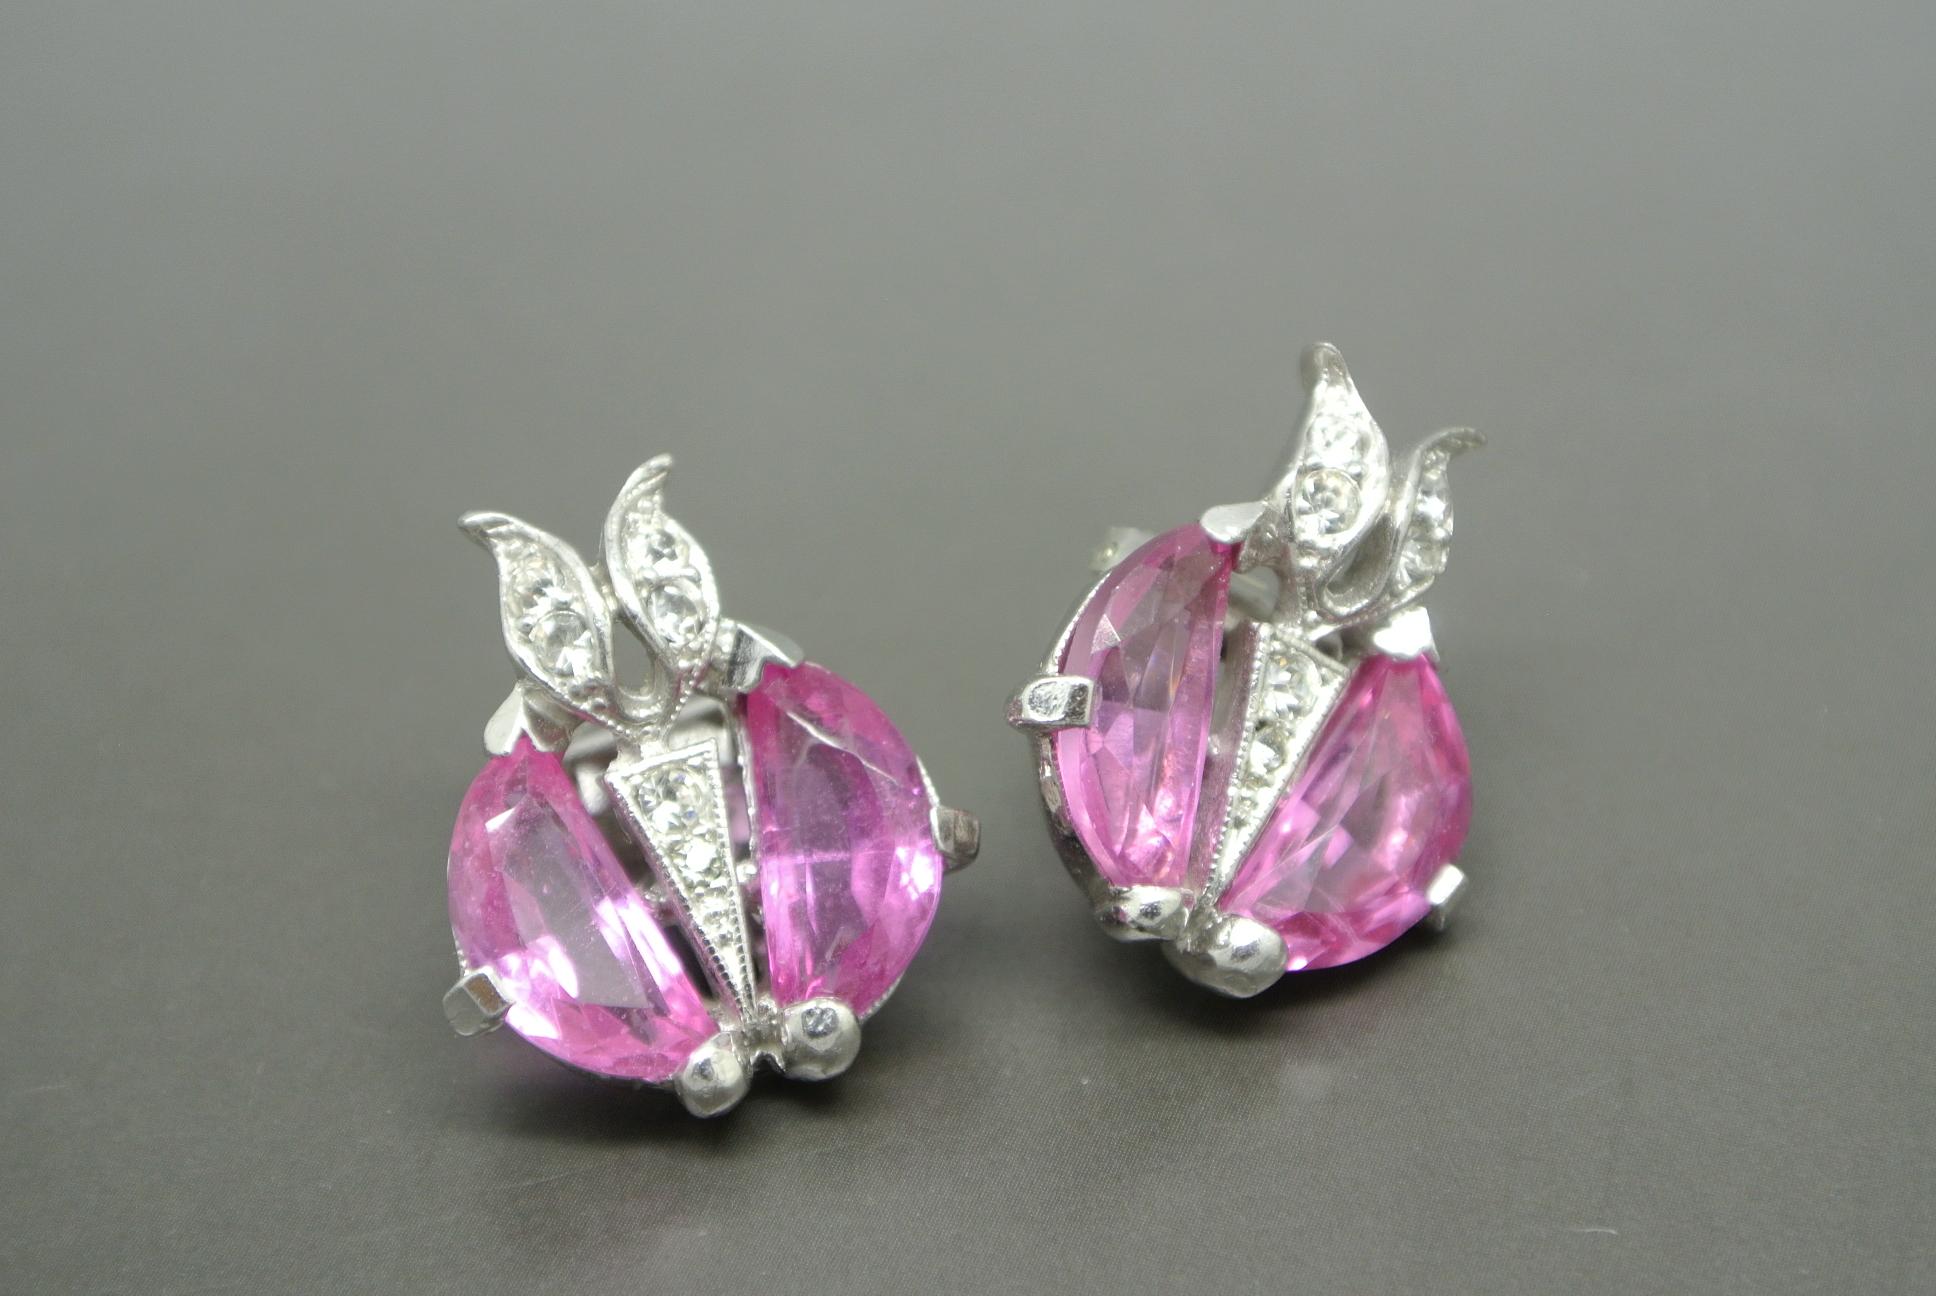 Trifari 40s earrings
Moon-shape Demilune cut stones